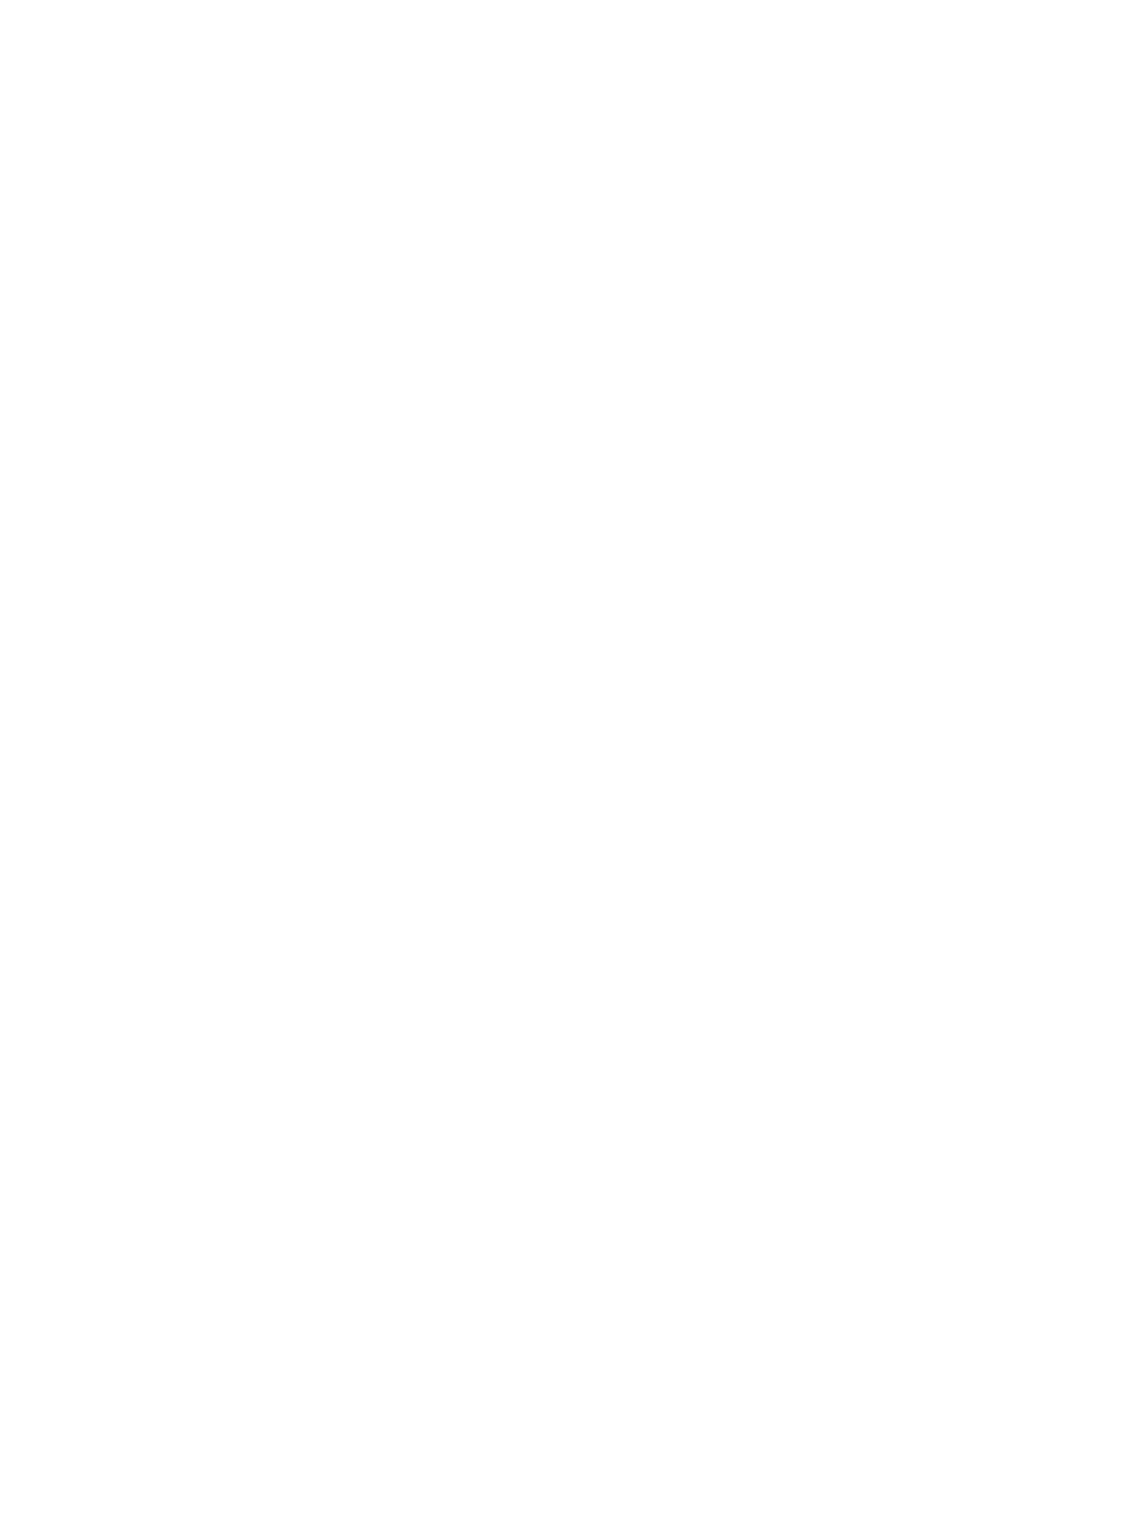 Ericsson logo for dark backgrounds (transparent PNG)